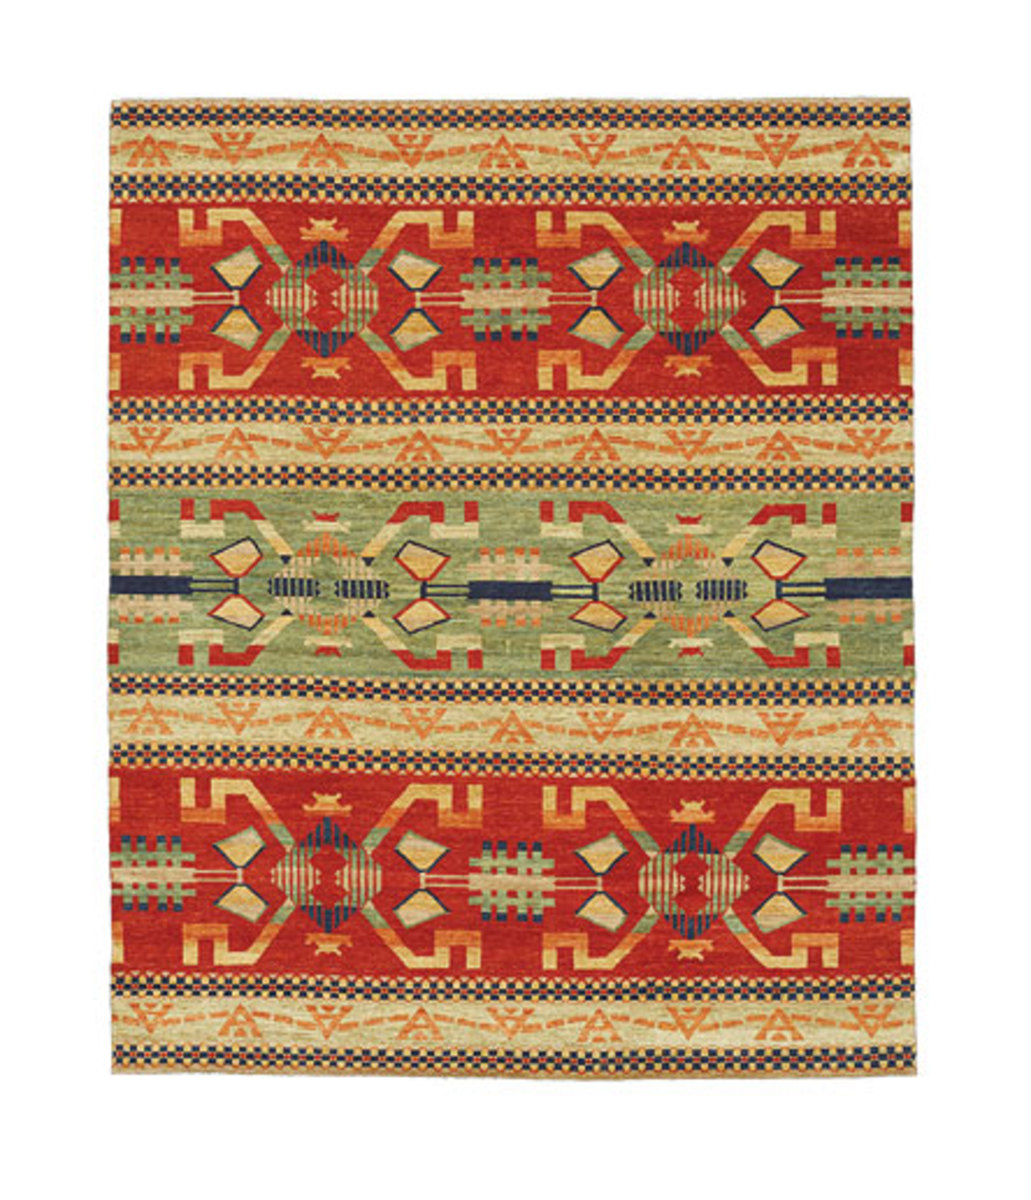 The Persian Carpet